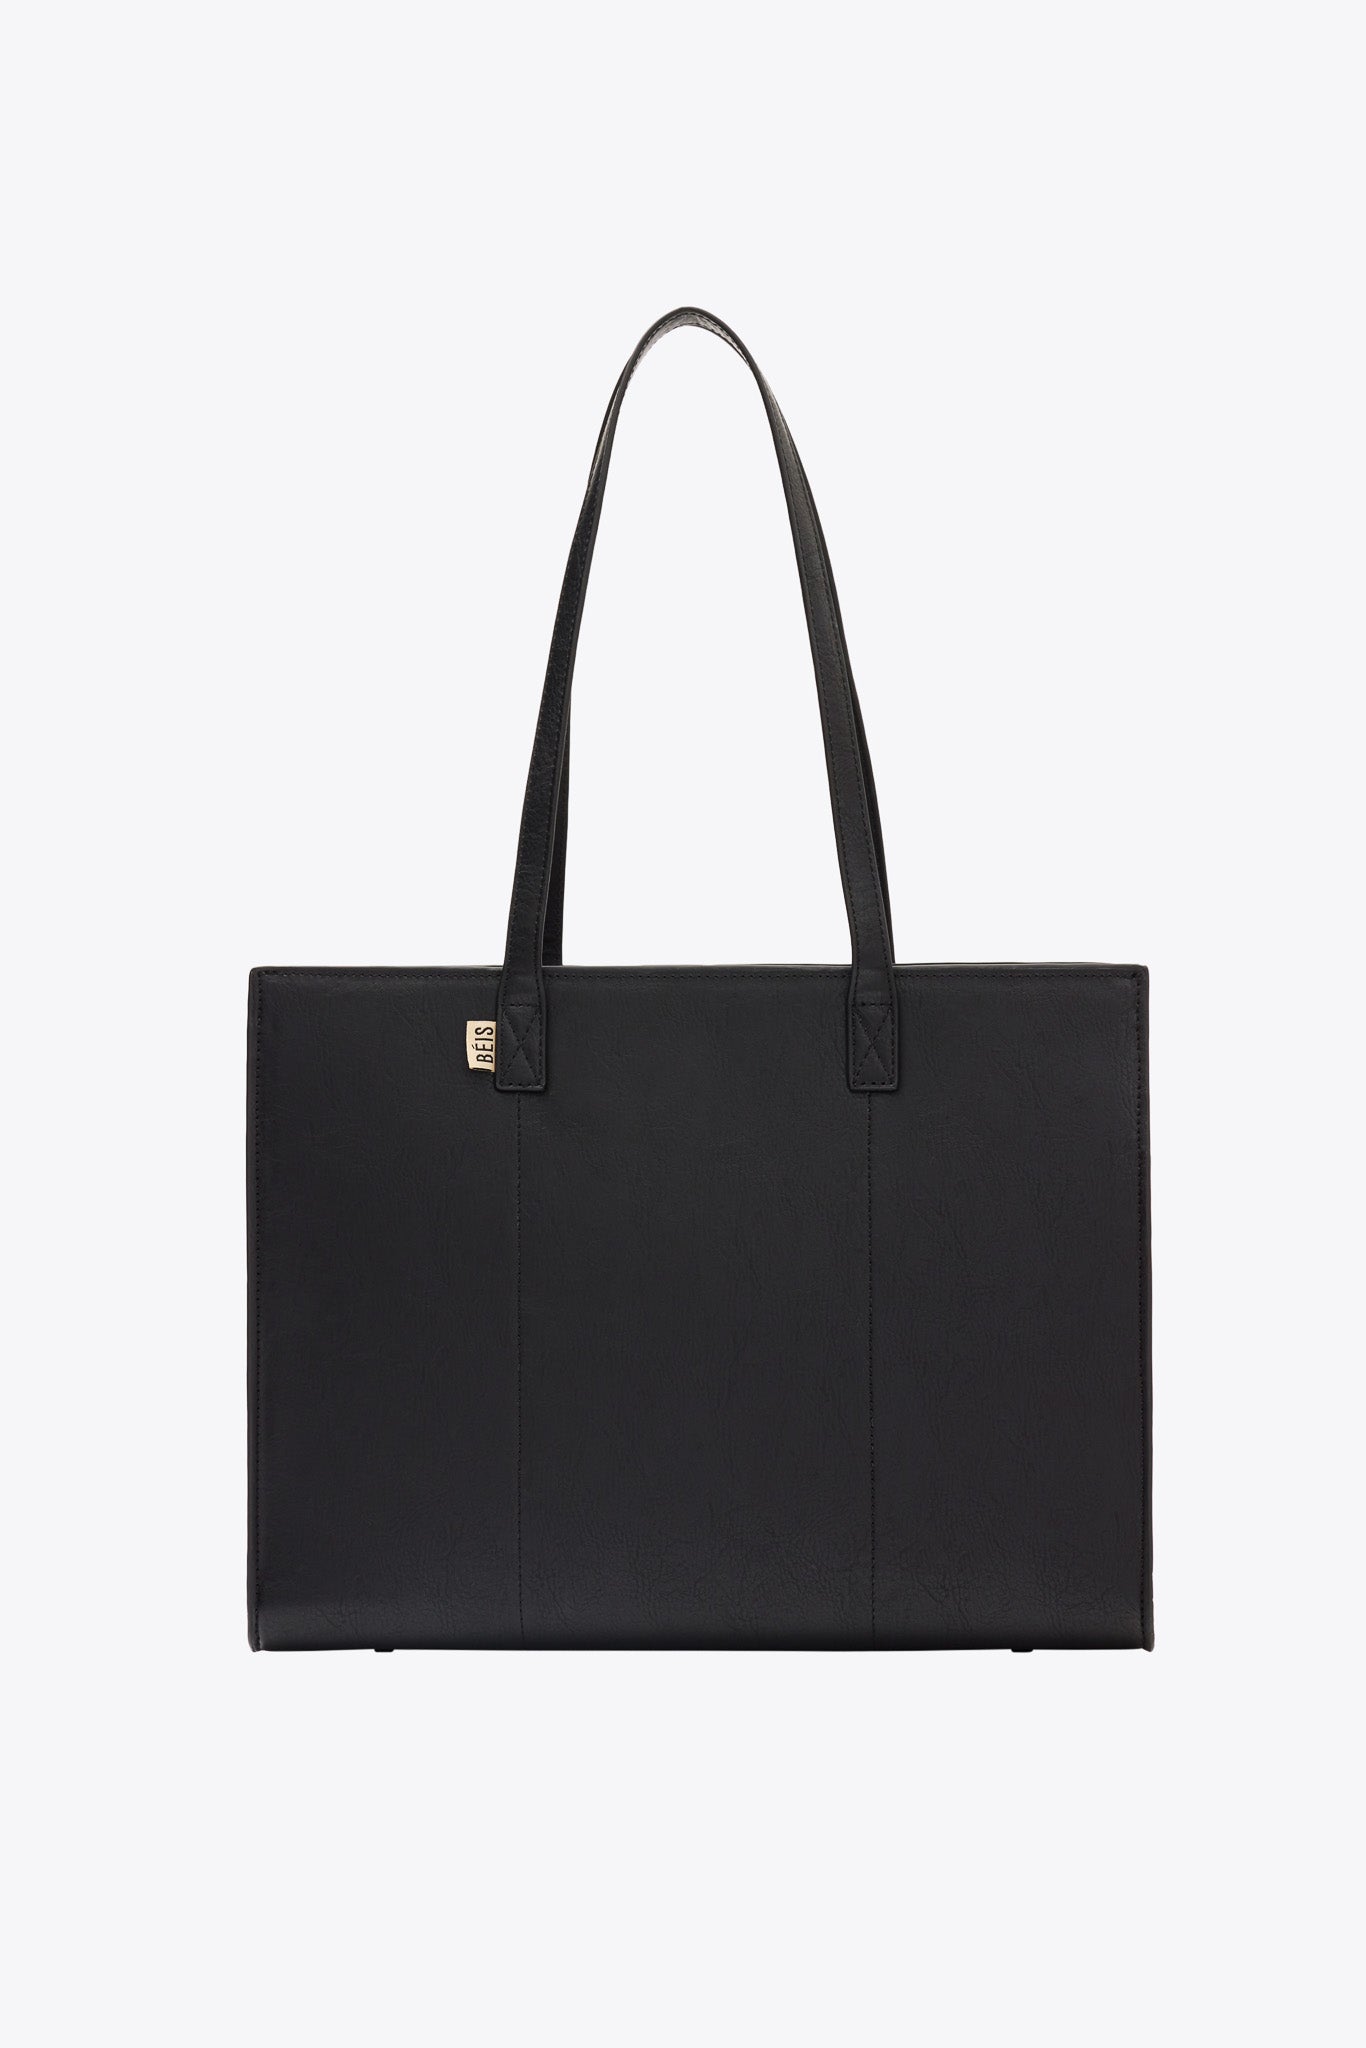 Premium and Convenient Lululemon Shopping Bag 